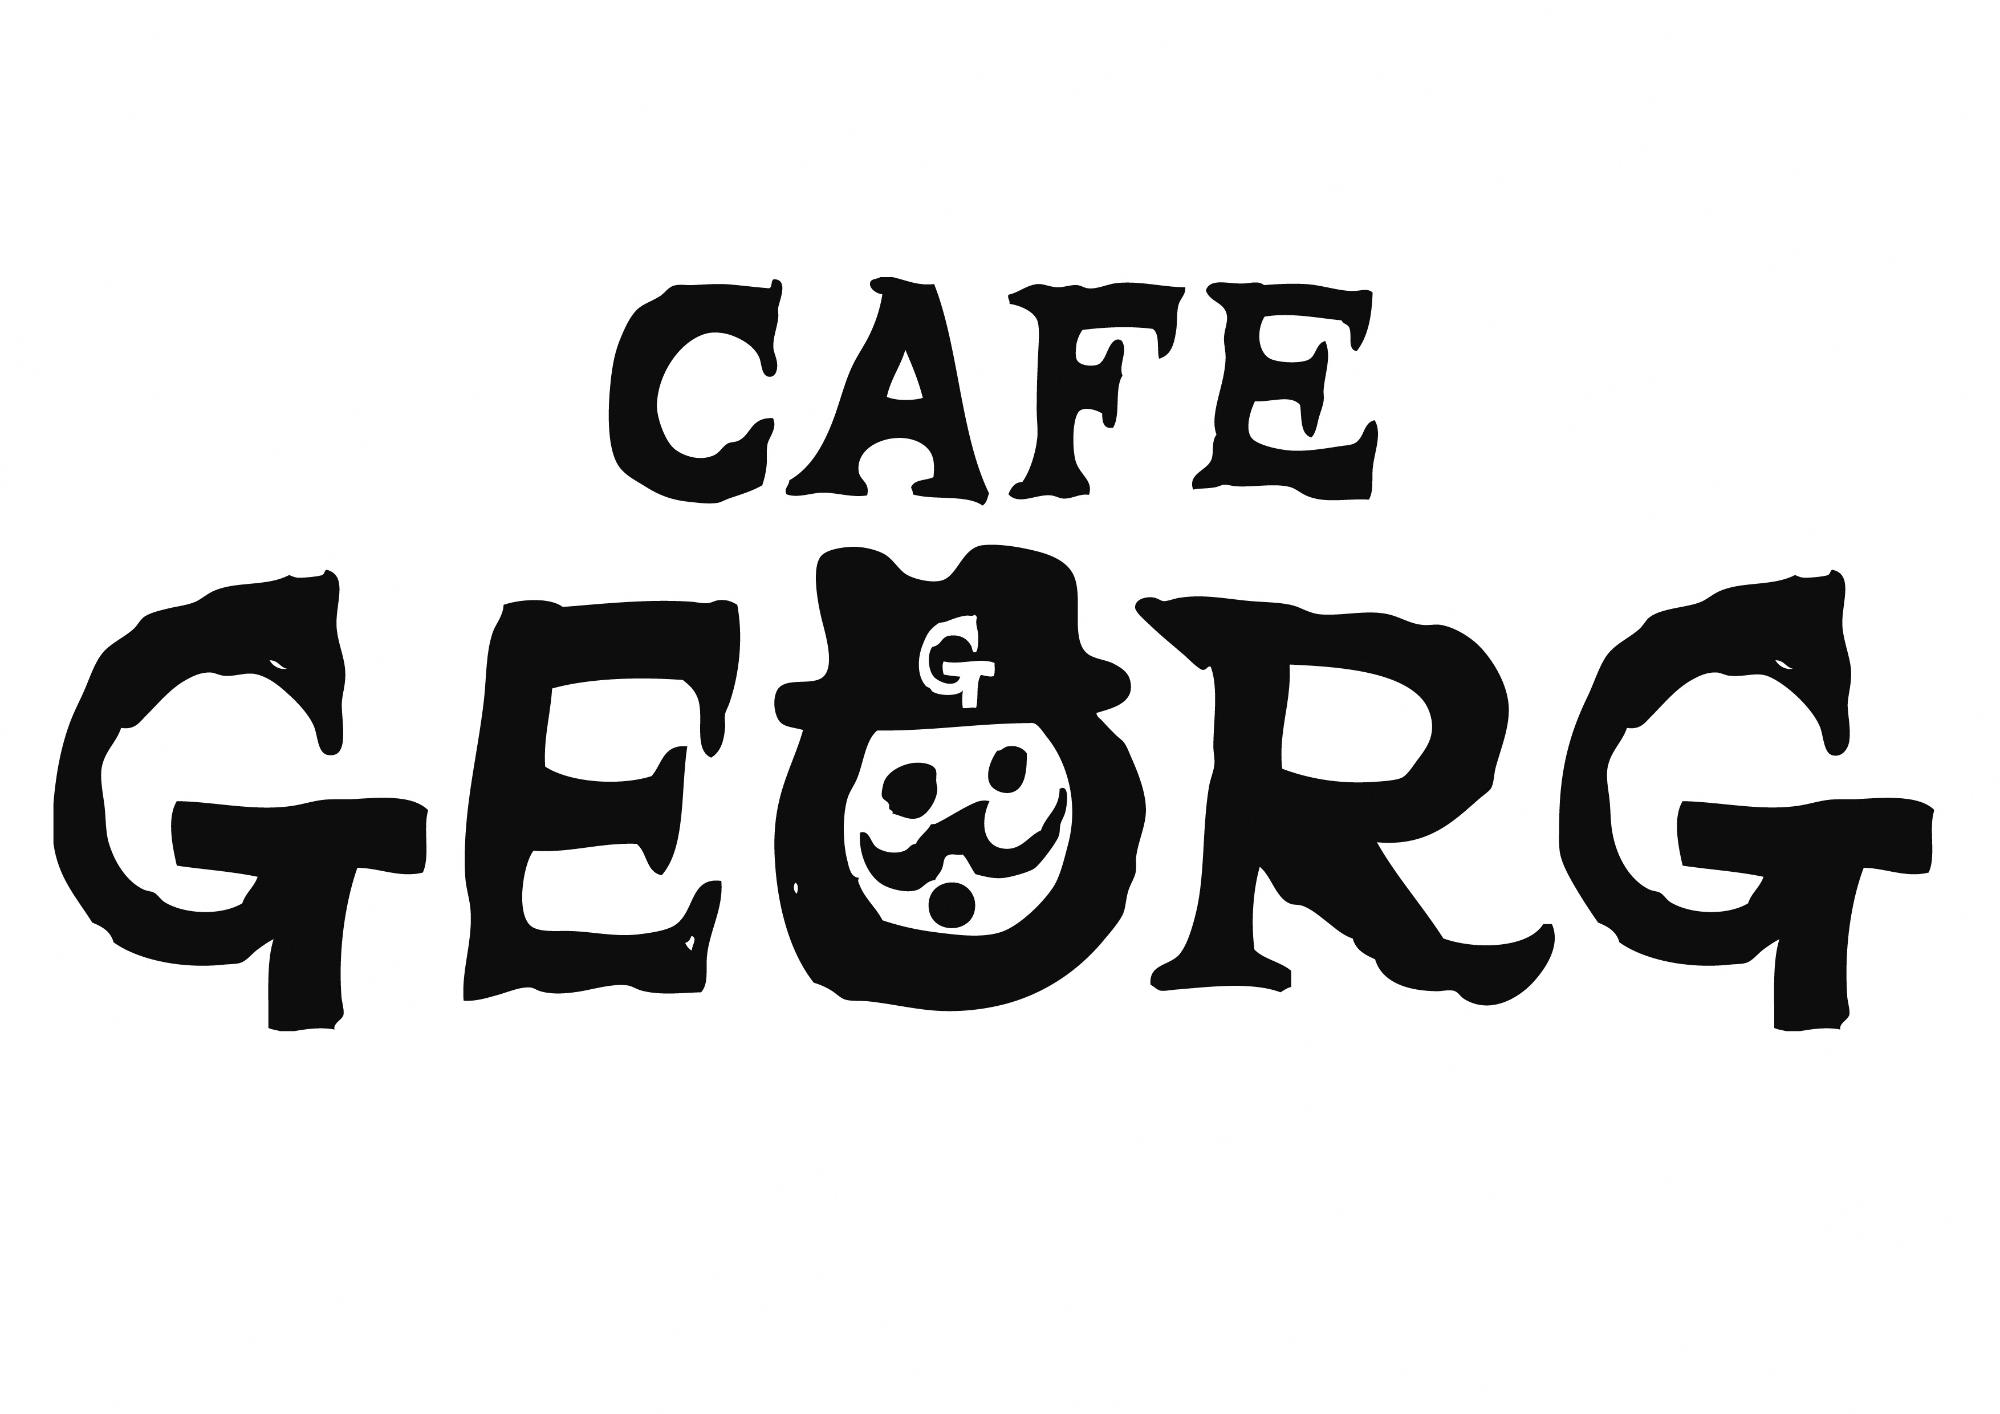 CAFE GEORG